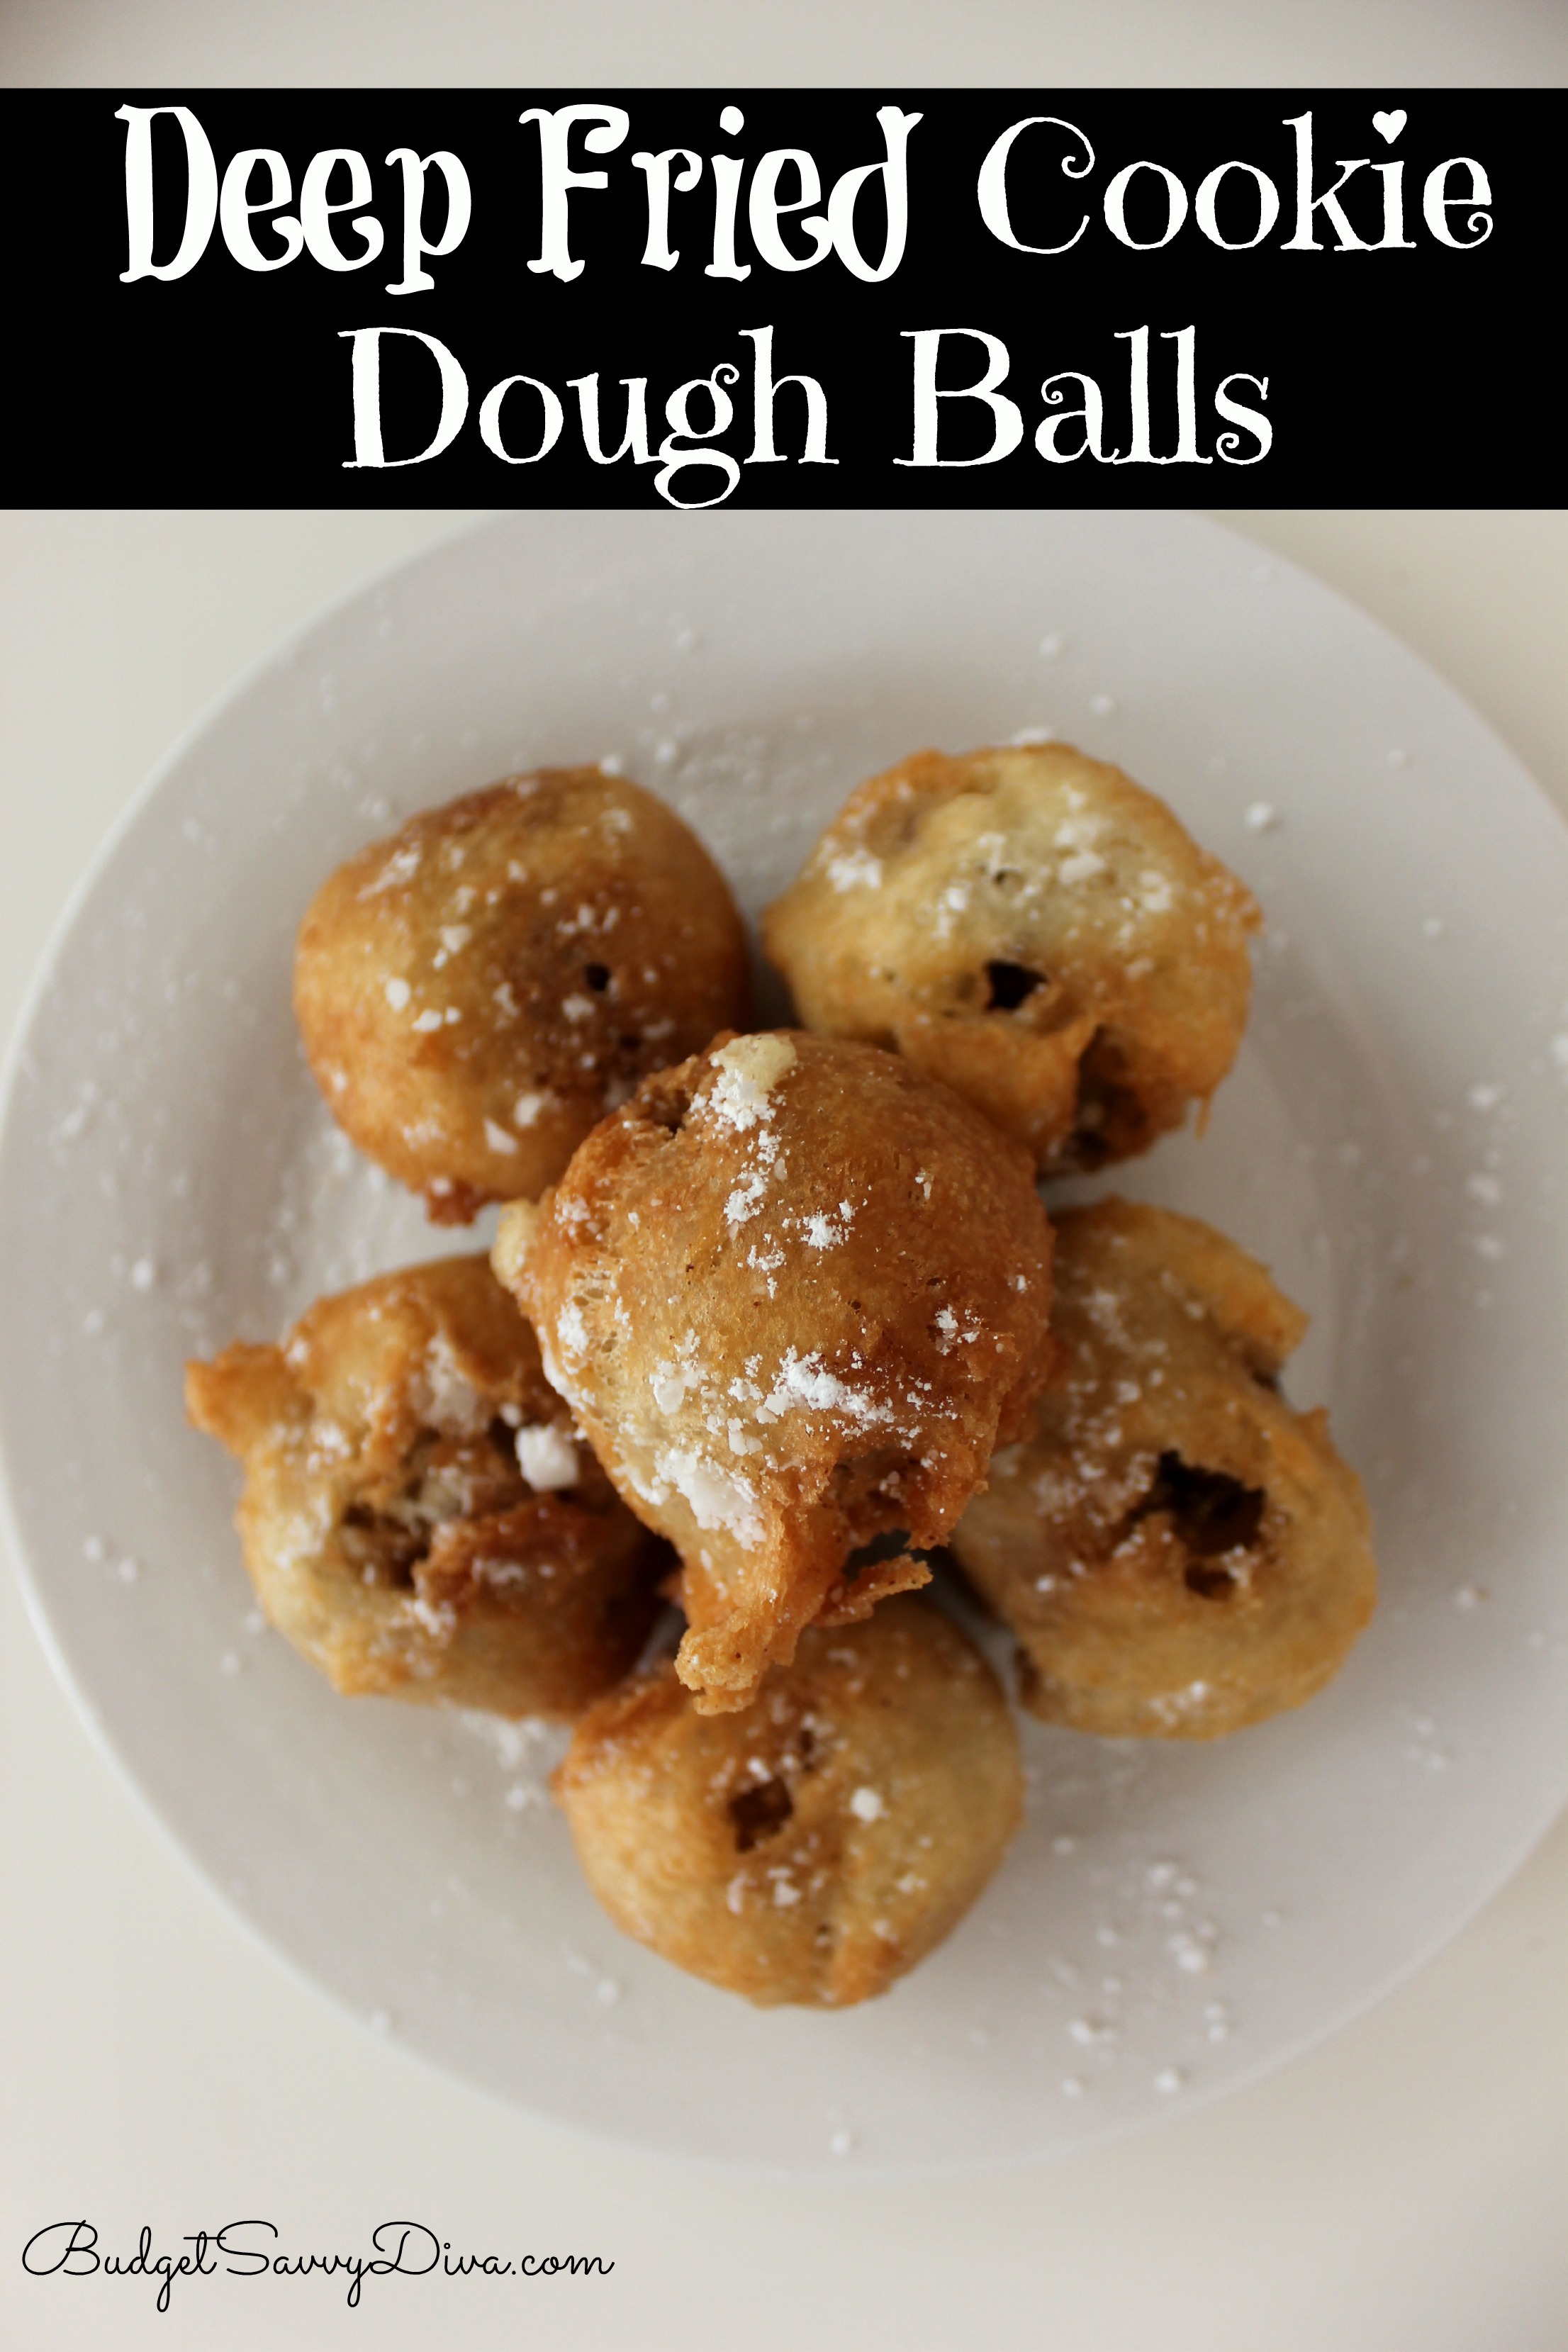 Deep Fried Cookie Dough Balls Recipe | Budget Savvy Diva